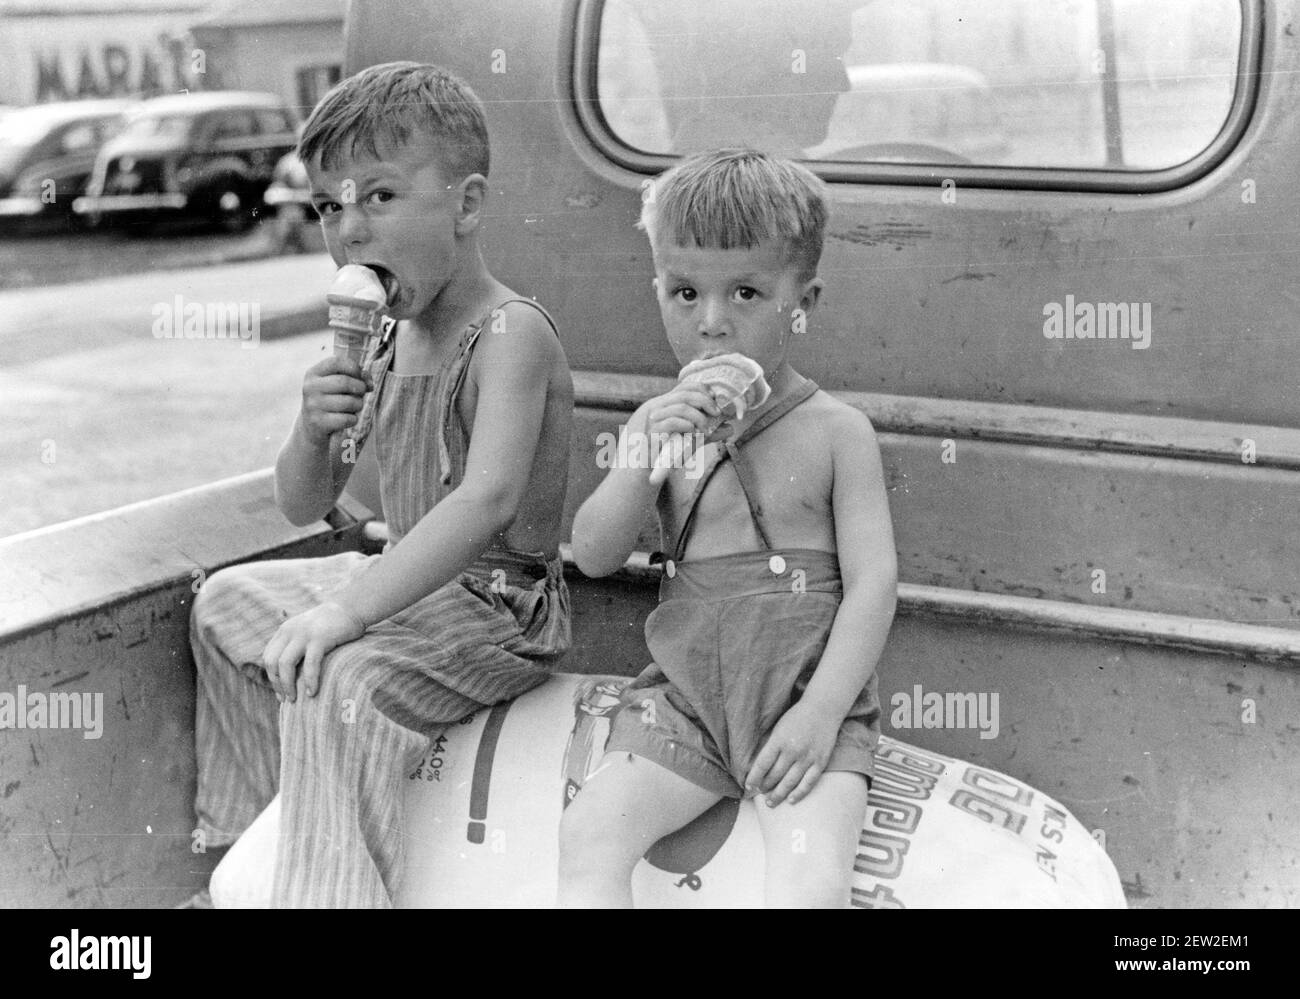 Farm boys eating ice-cream cones. Washington, Indiana, July 1941 Stock Photo